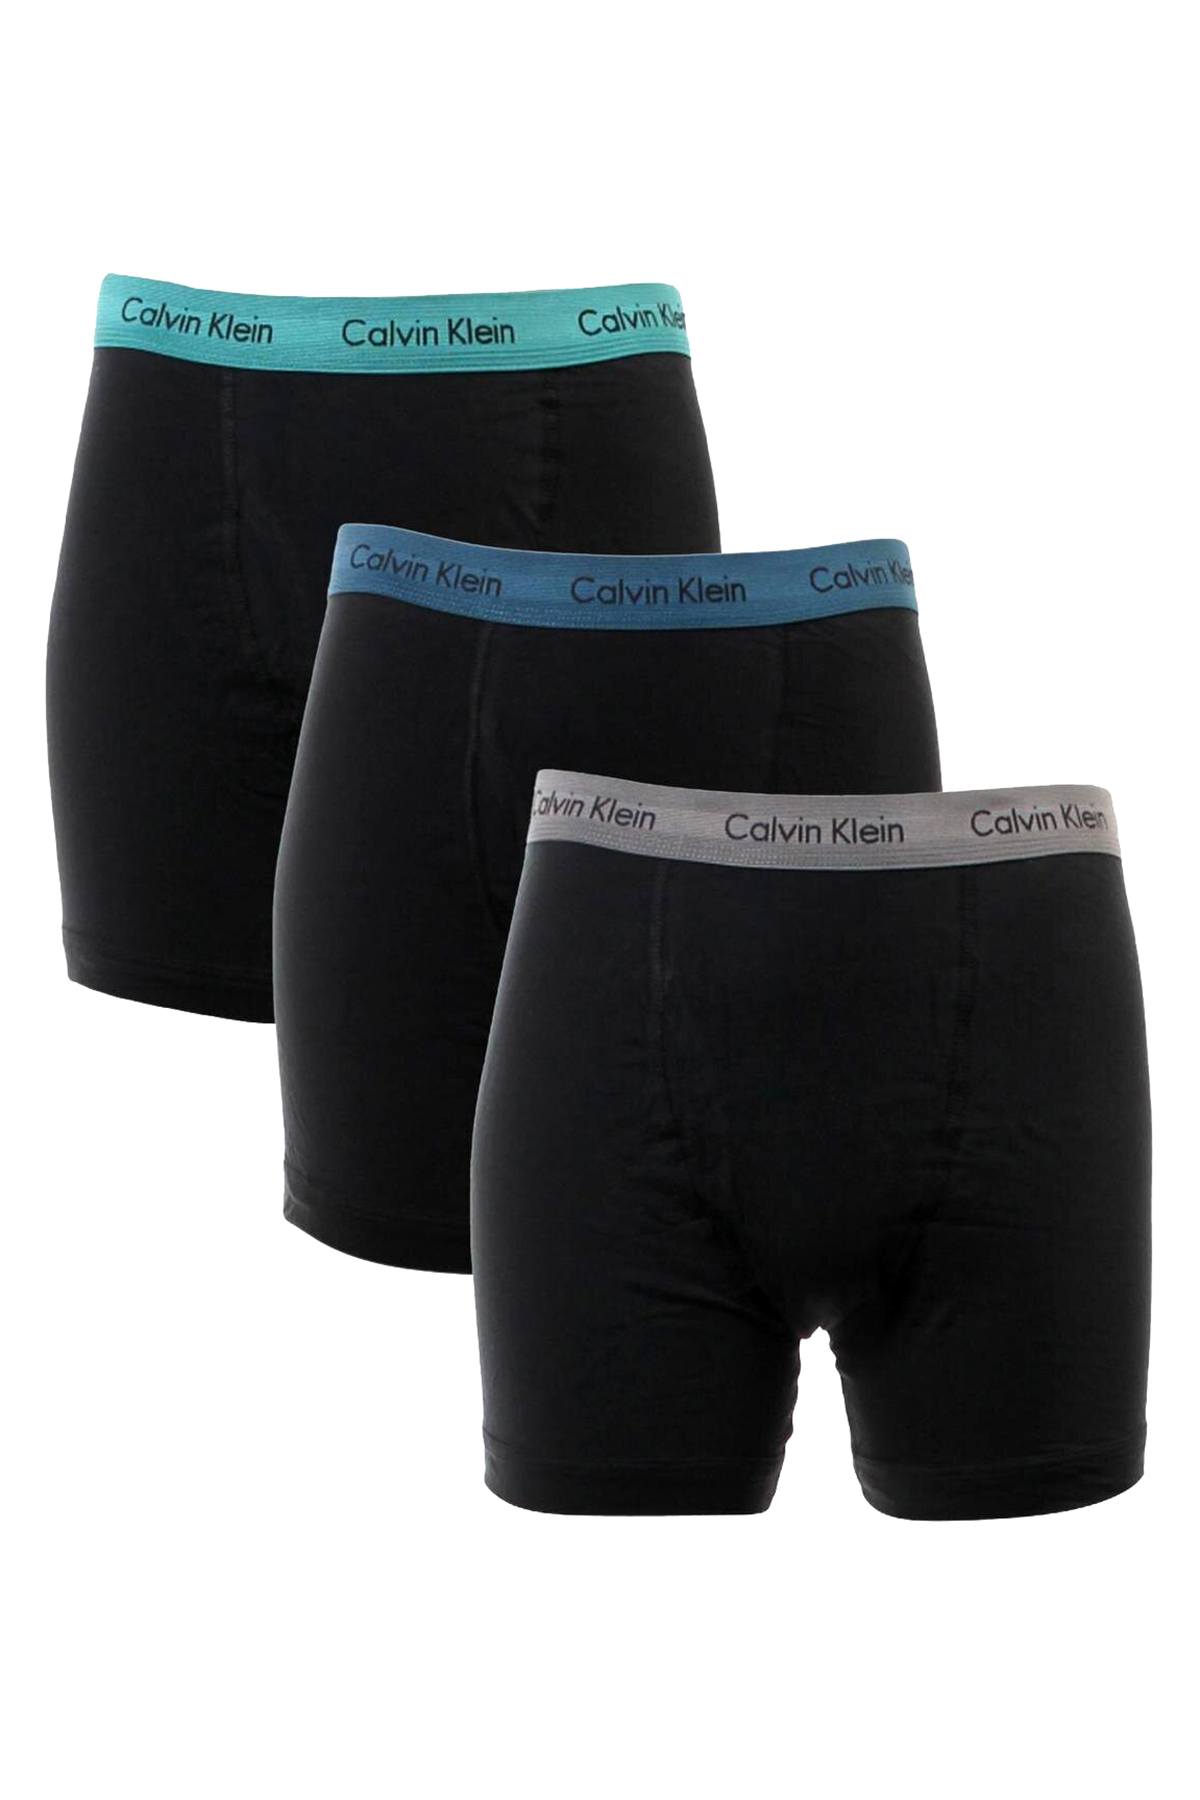 Calvin Klein Classic Fit Cotton Stretch Boxer Brief 3-Pack